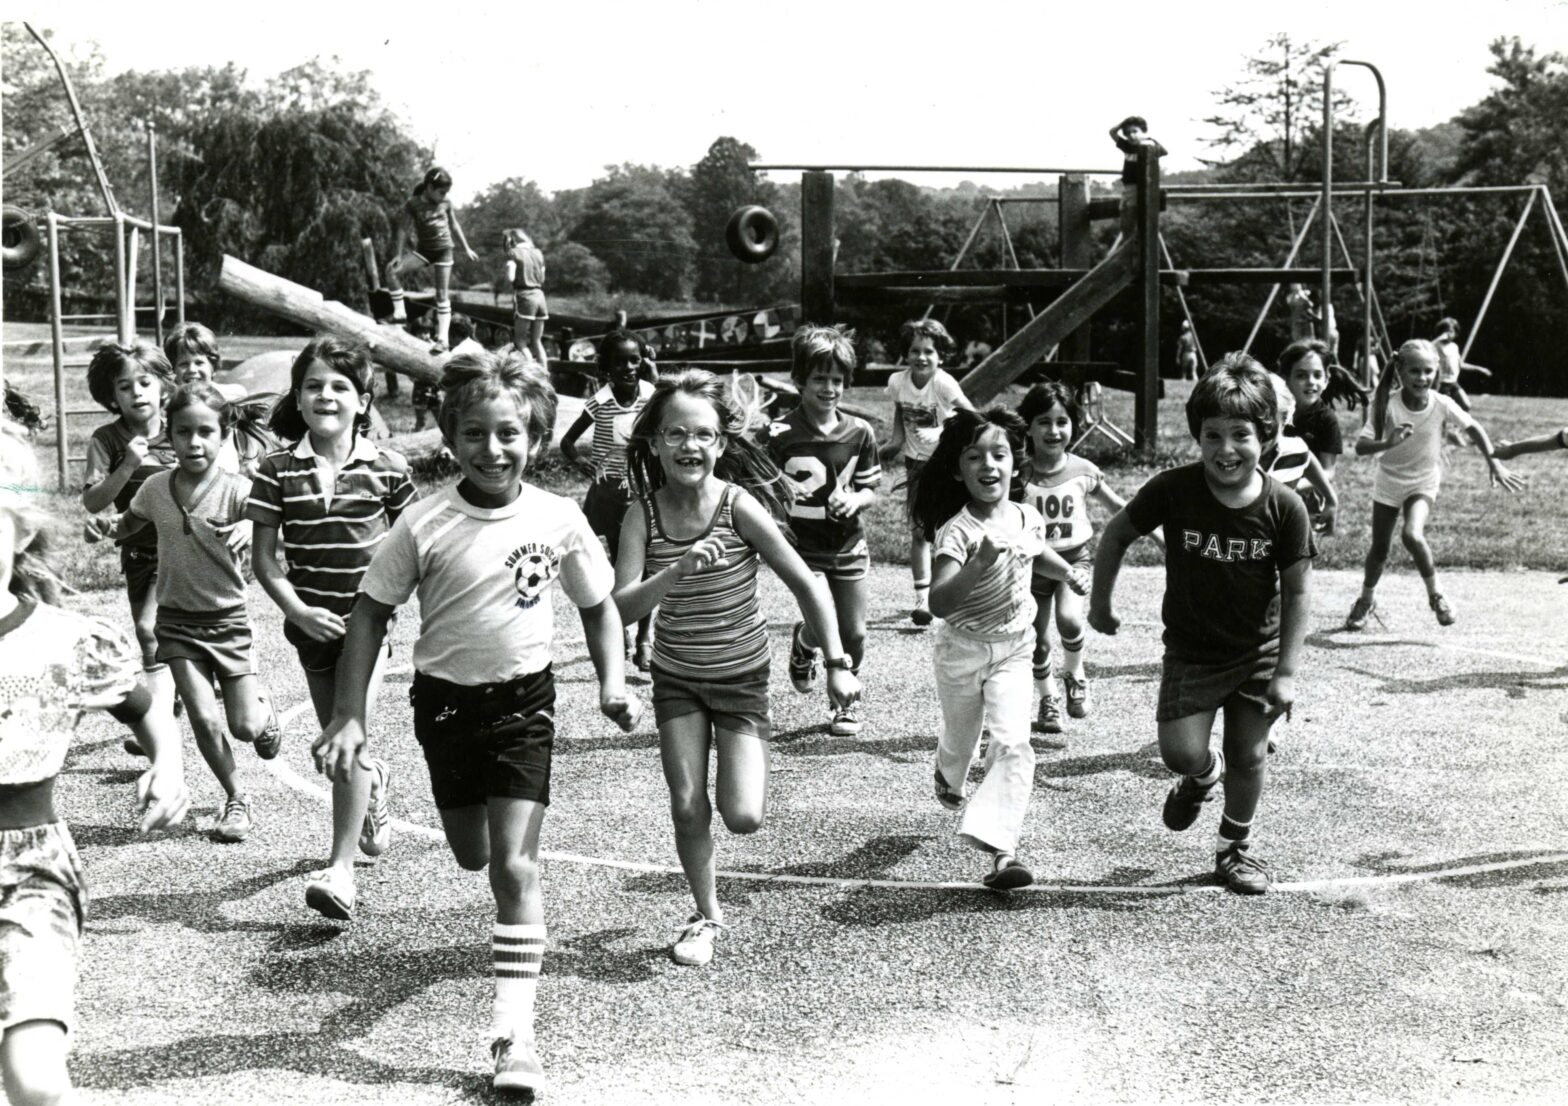 park-lower-schoolers-at-recess-c1980